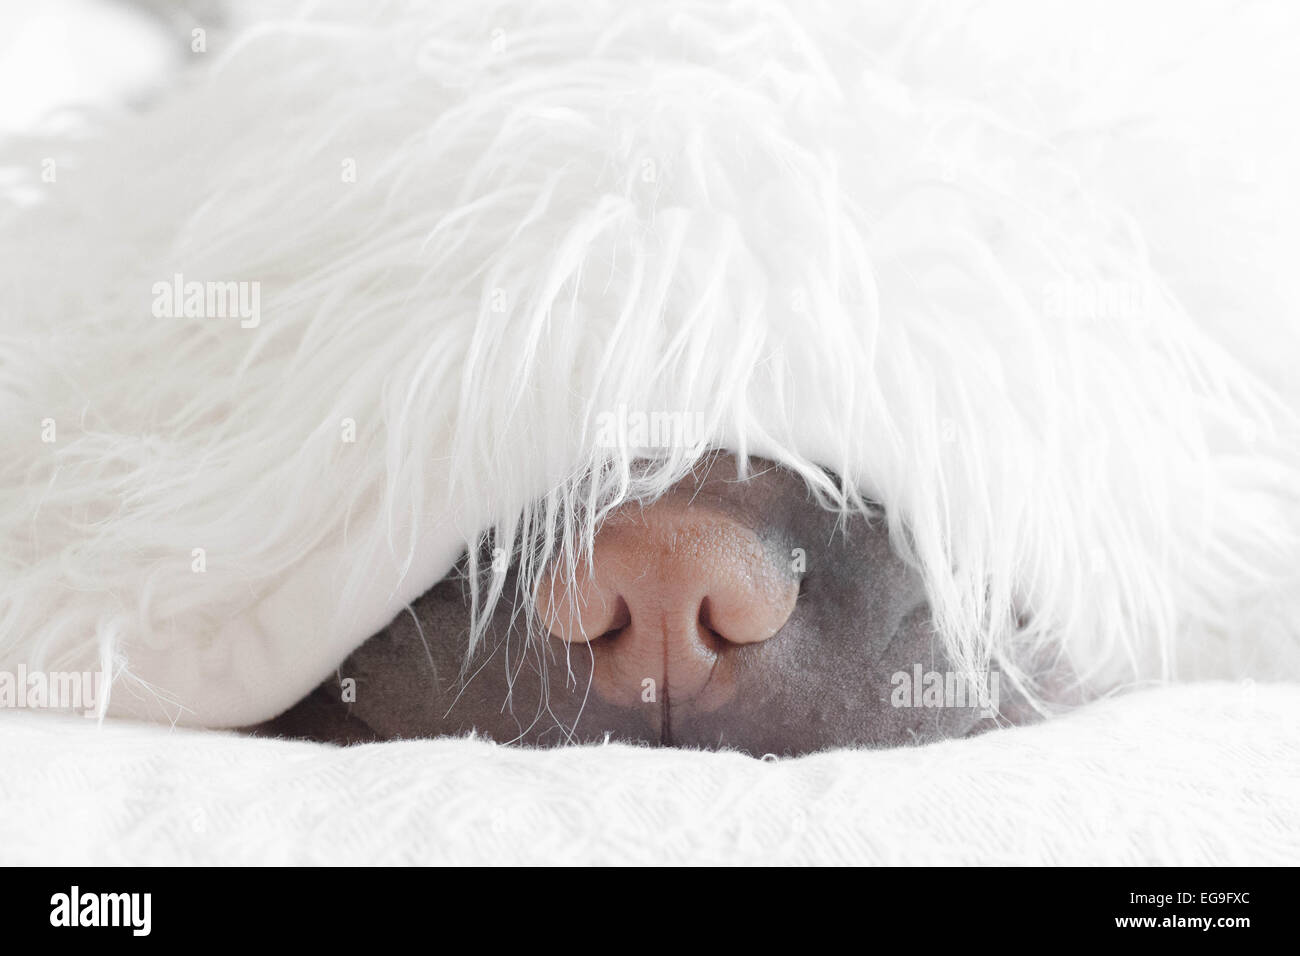 Shar pei dog sleeping under fluffy blanket Stock Photo